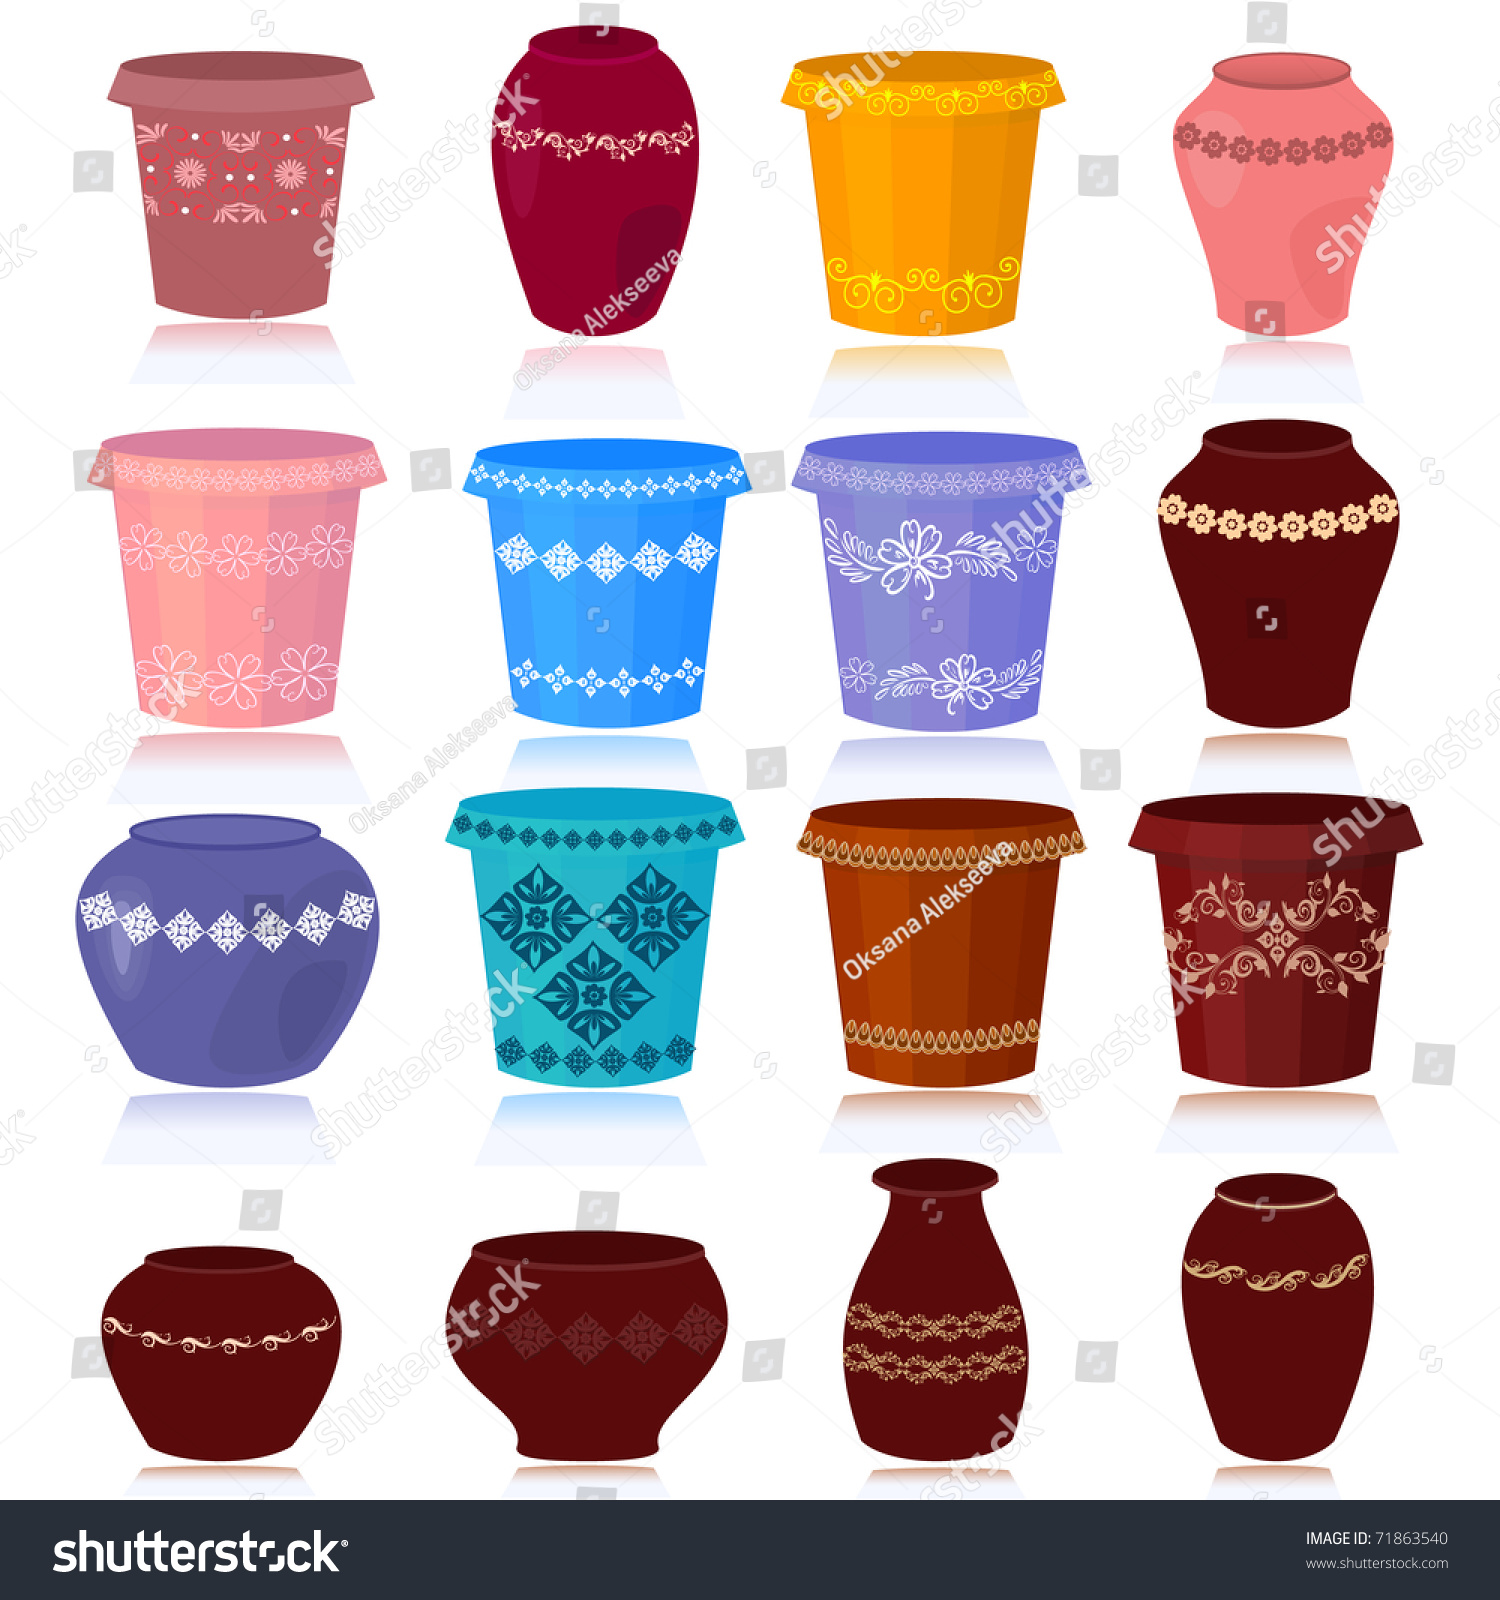 Set Of Decorative Flower Pots Stock Vector Illustration 71863540